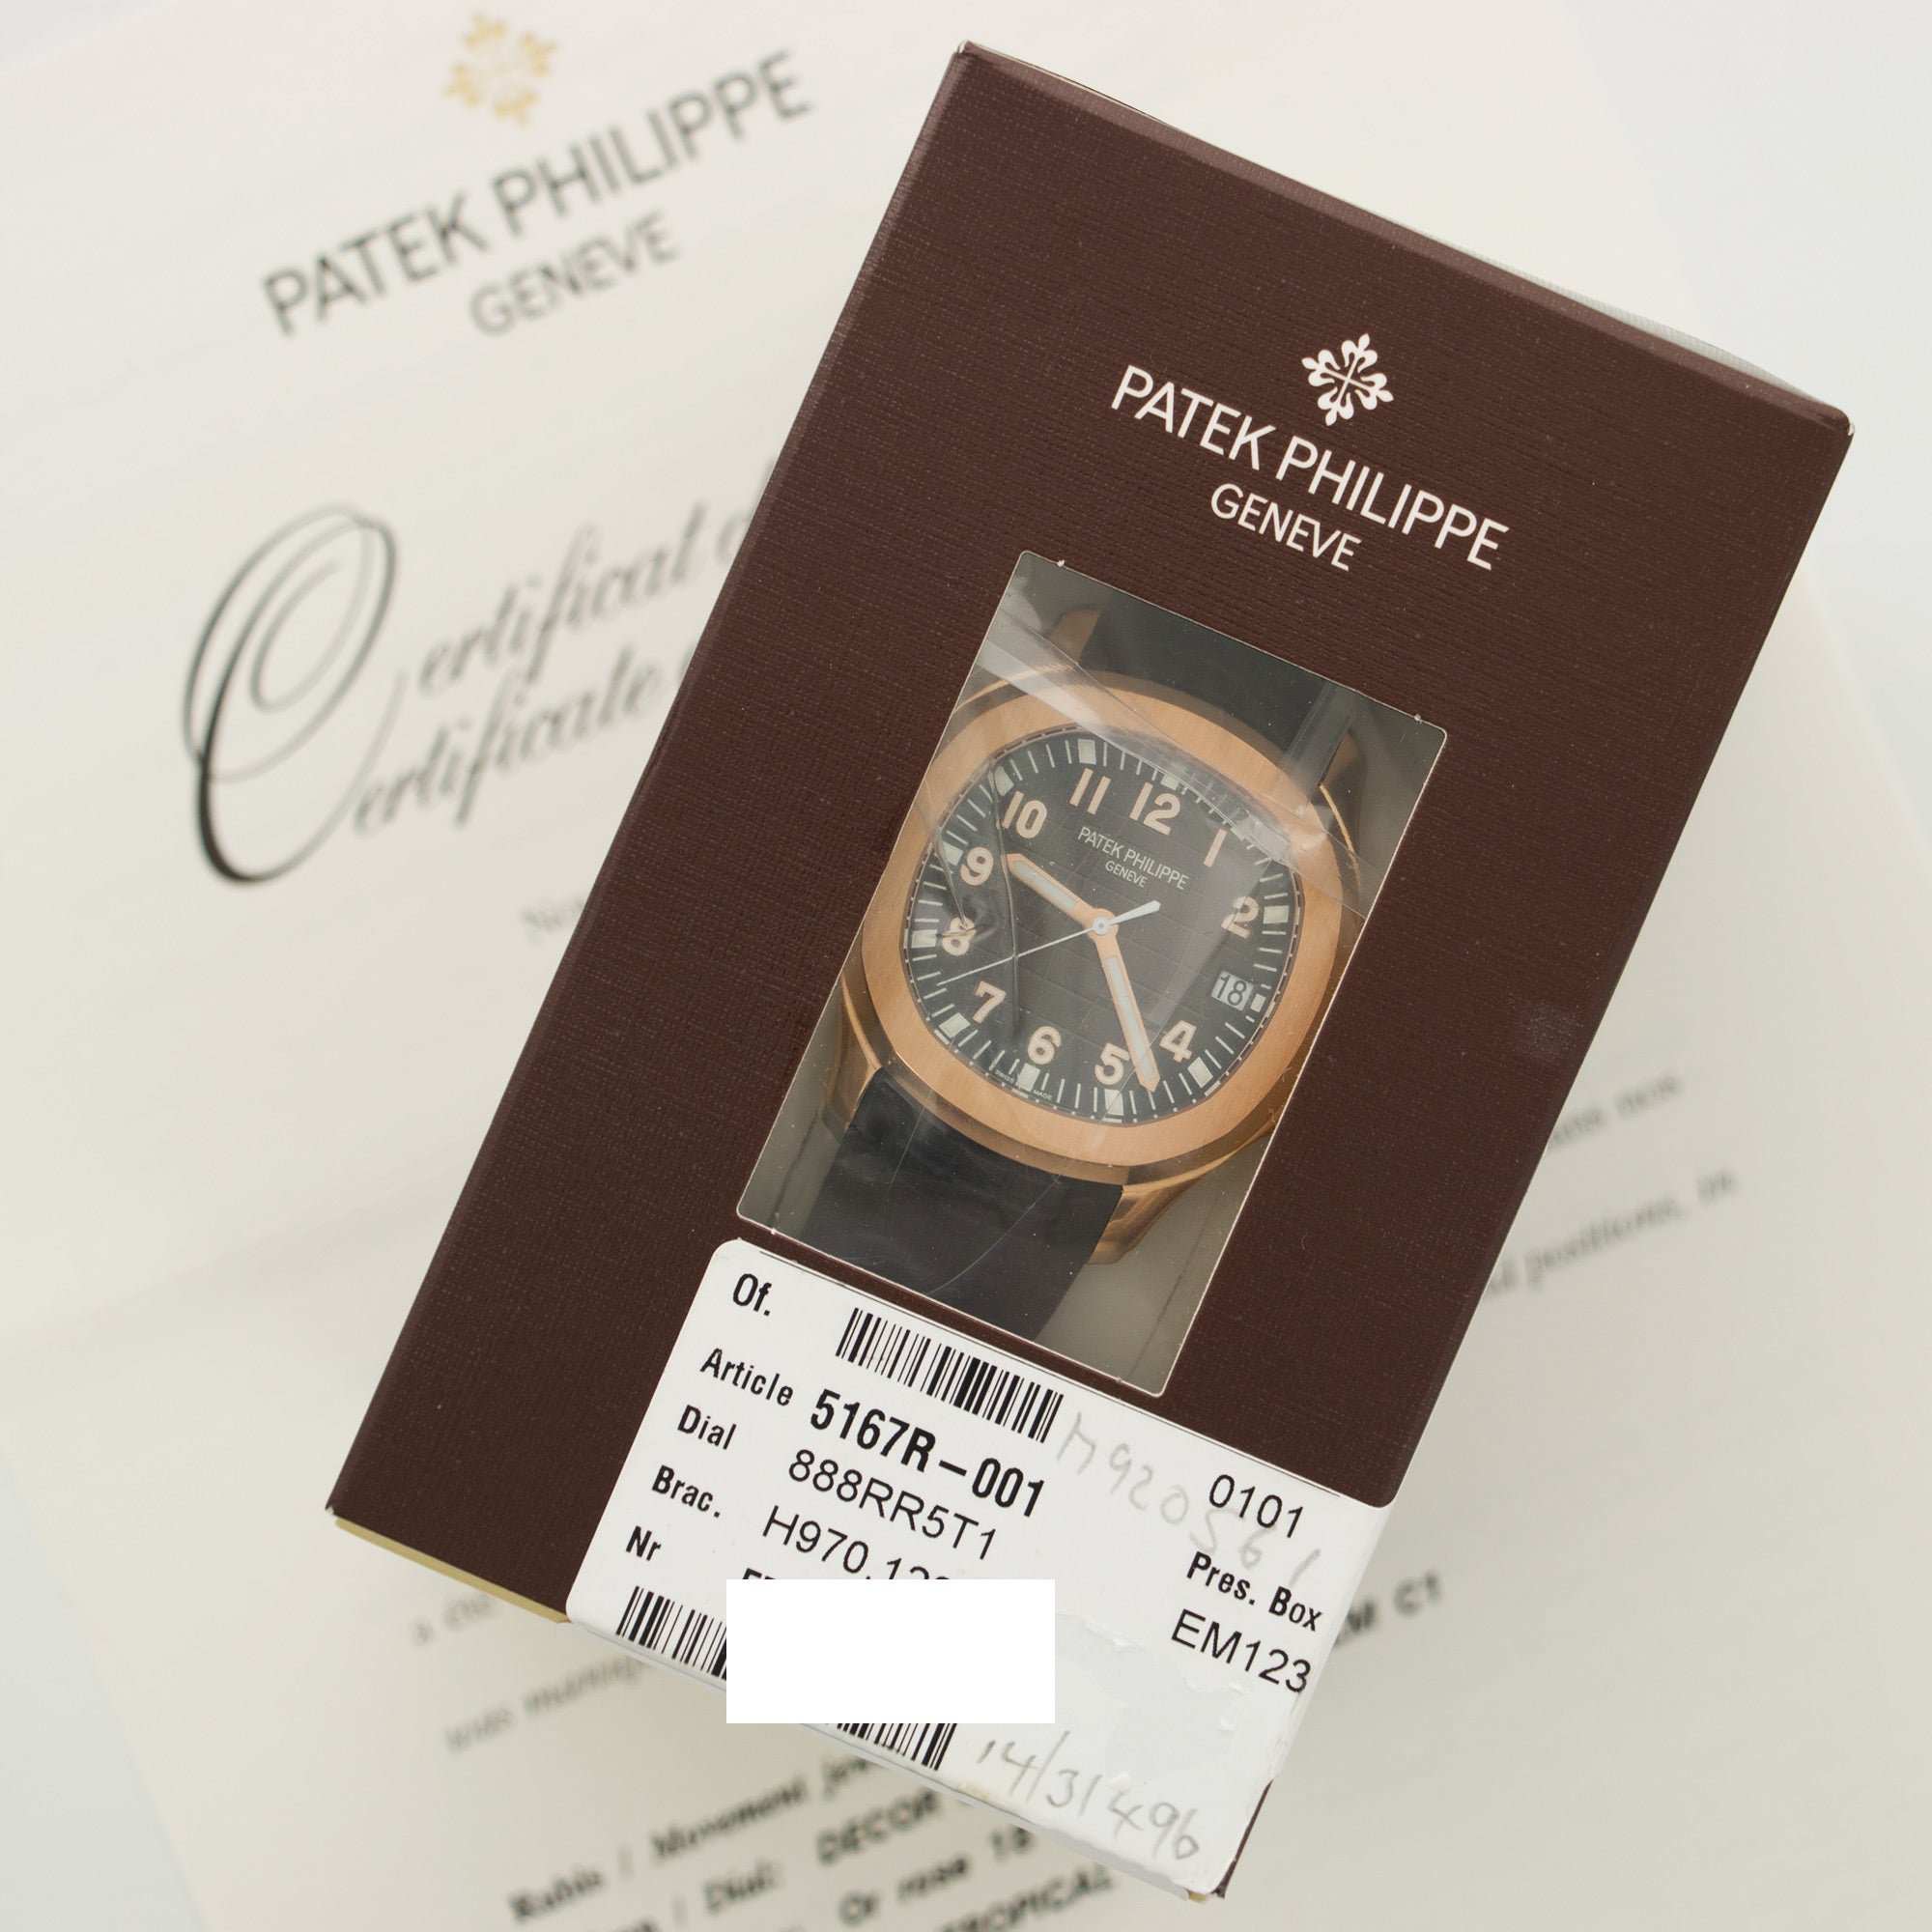 Patek Philippe - Patek Philippe Rose Gold Aquanaut Watch Ref. 5167R - The Keystone Watches